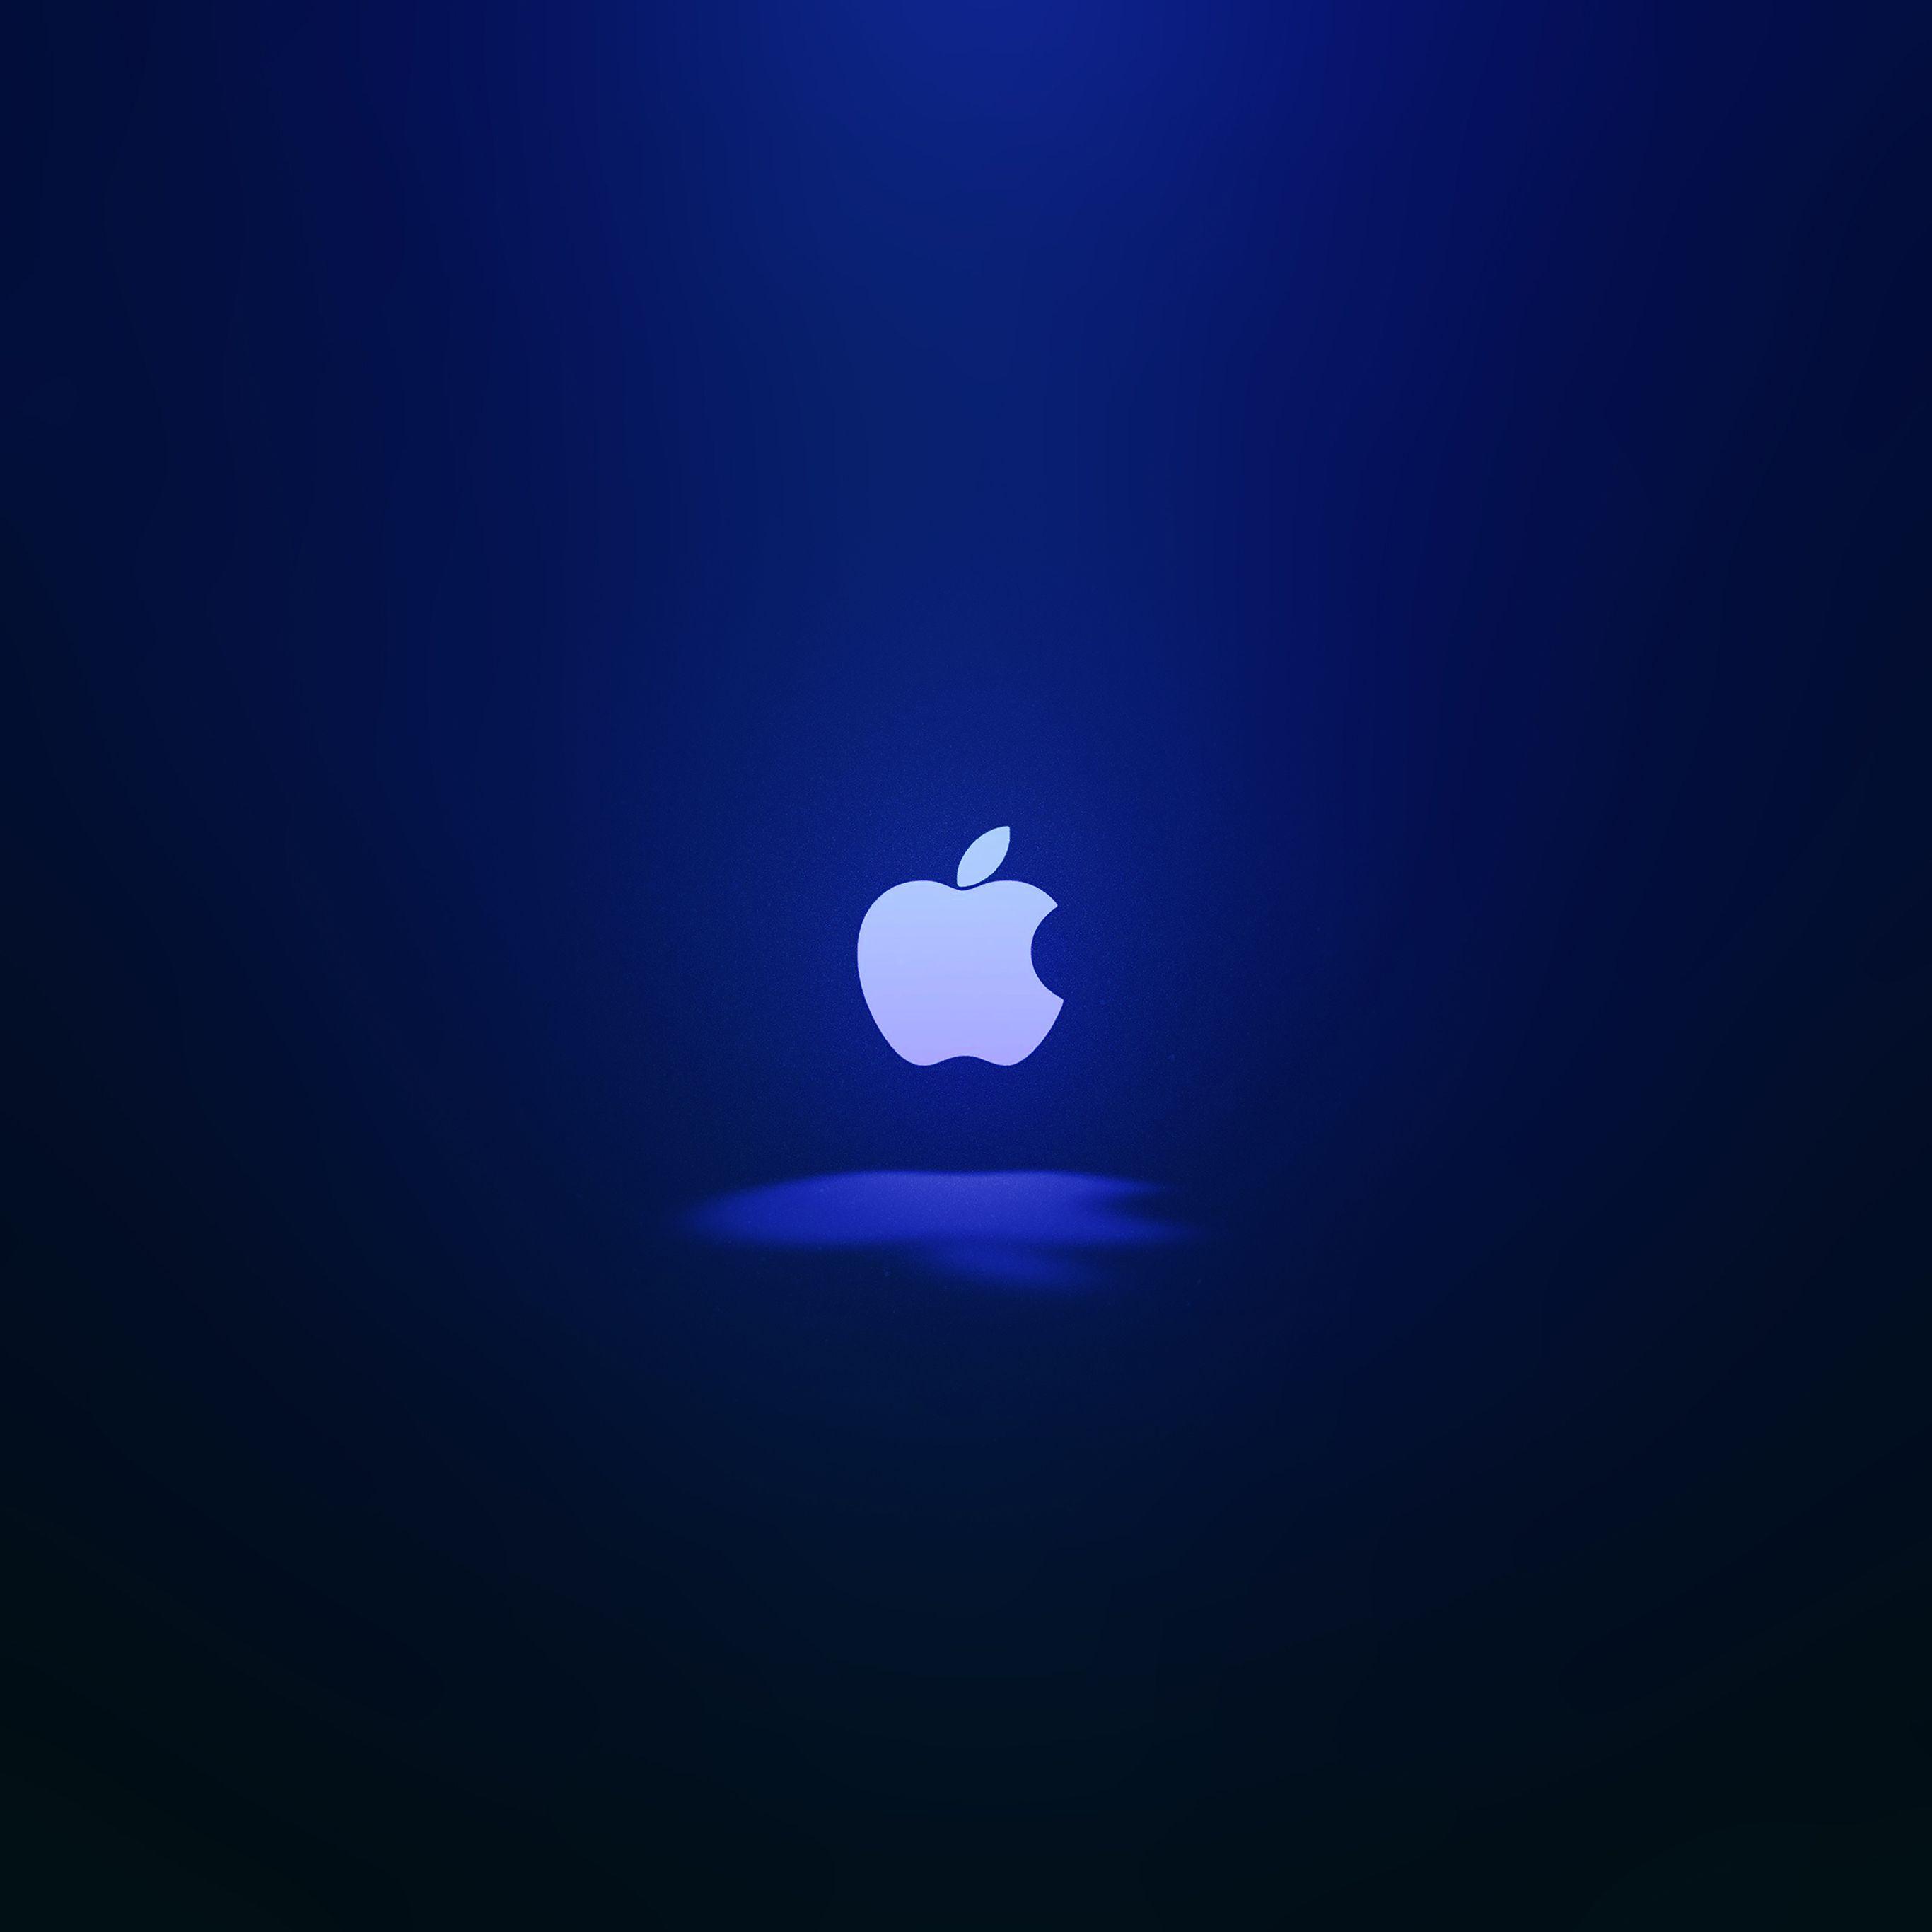 B in Apple Logo - Wallpapers of the week: Apple logo